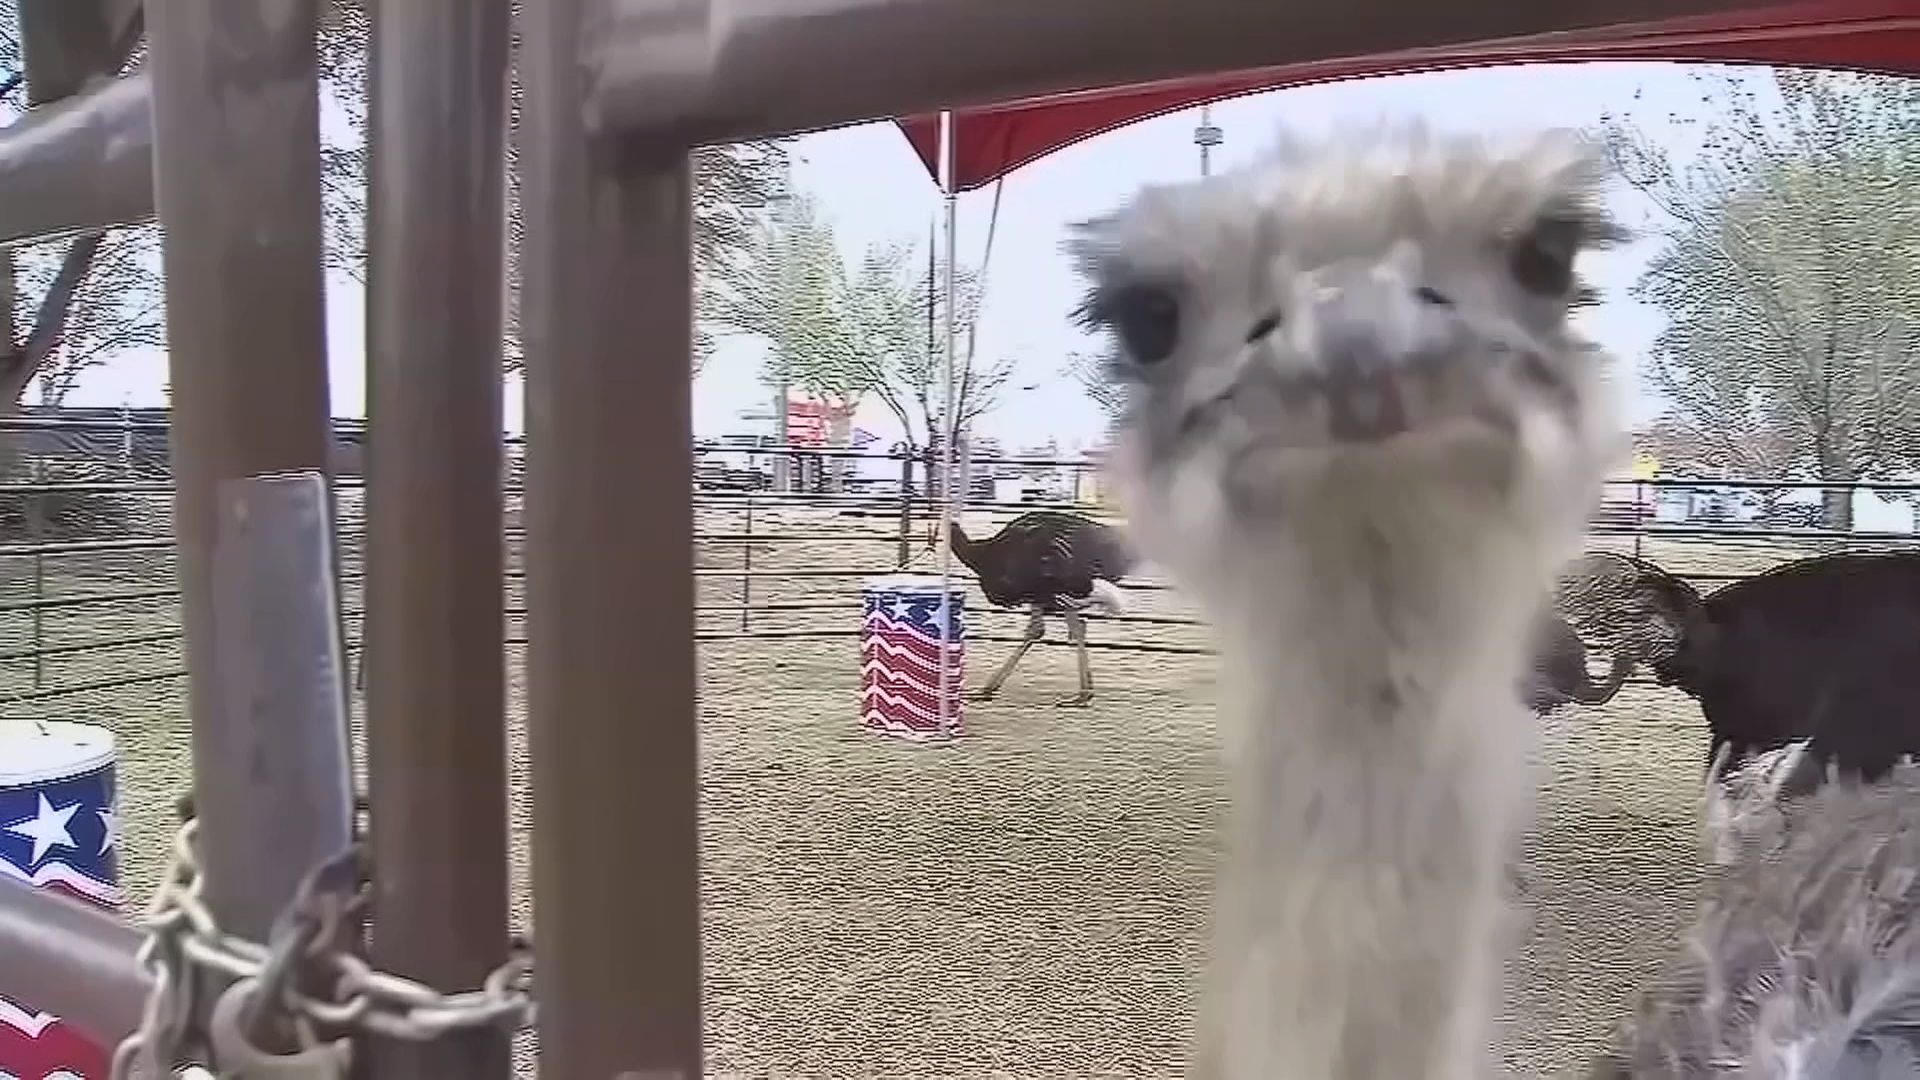 Landing - Real Ostrich